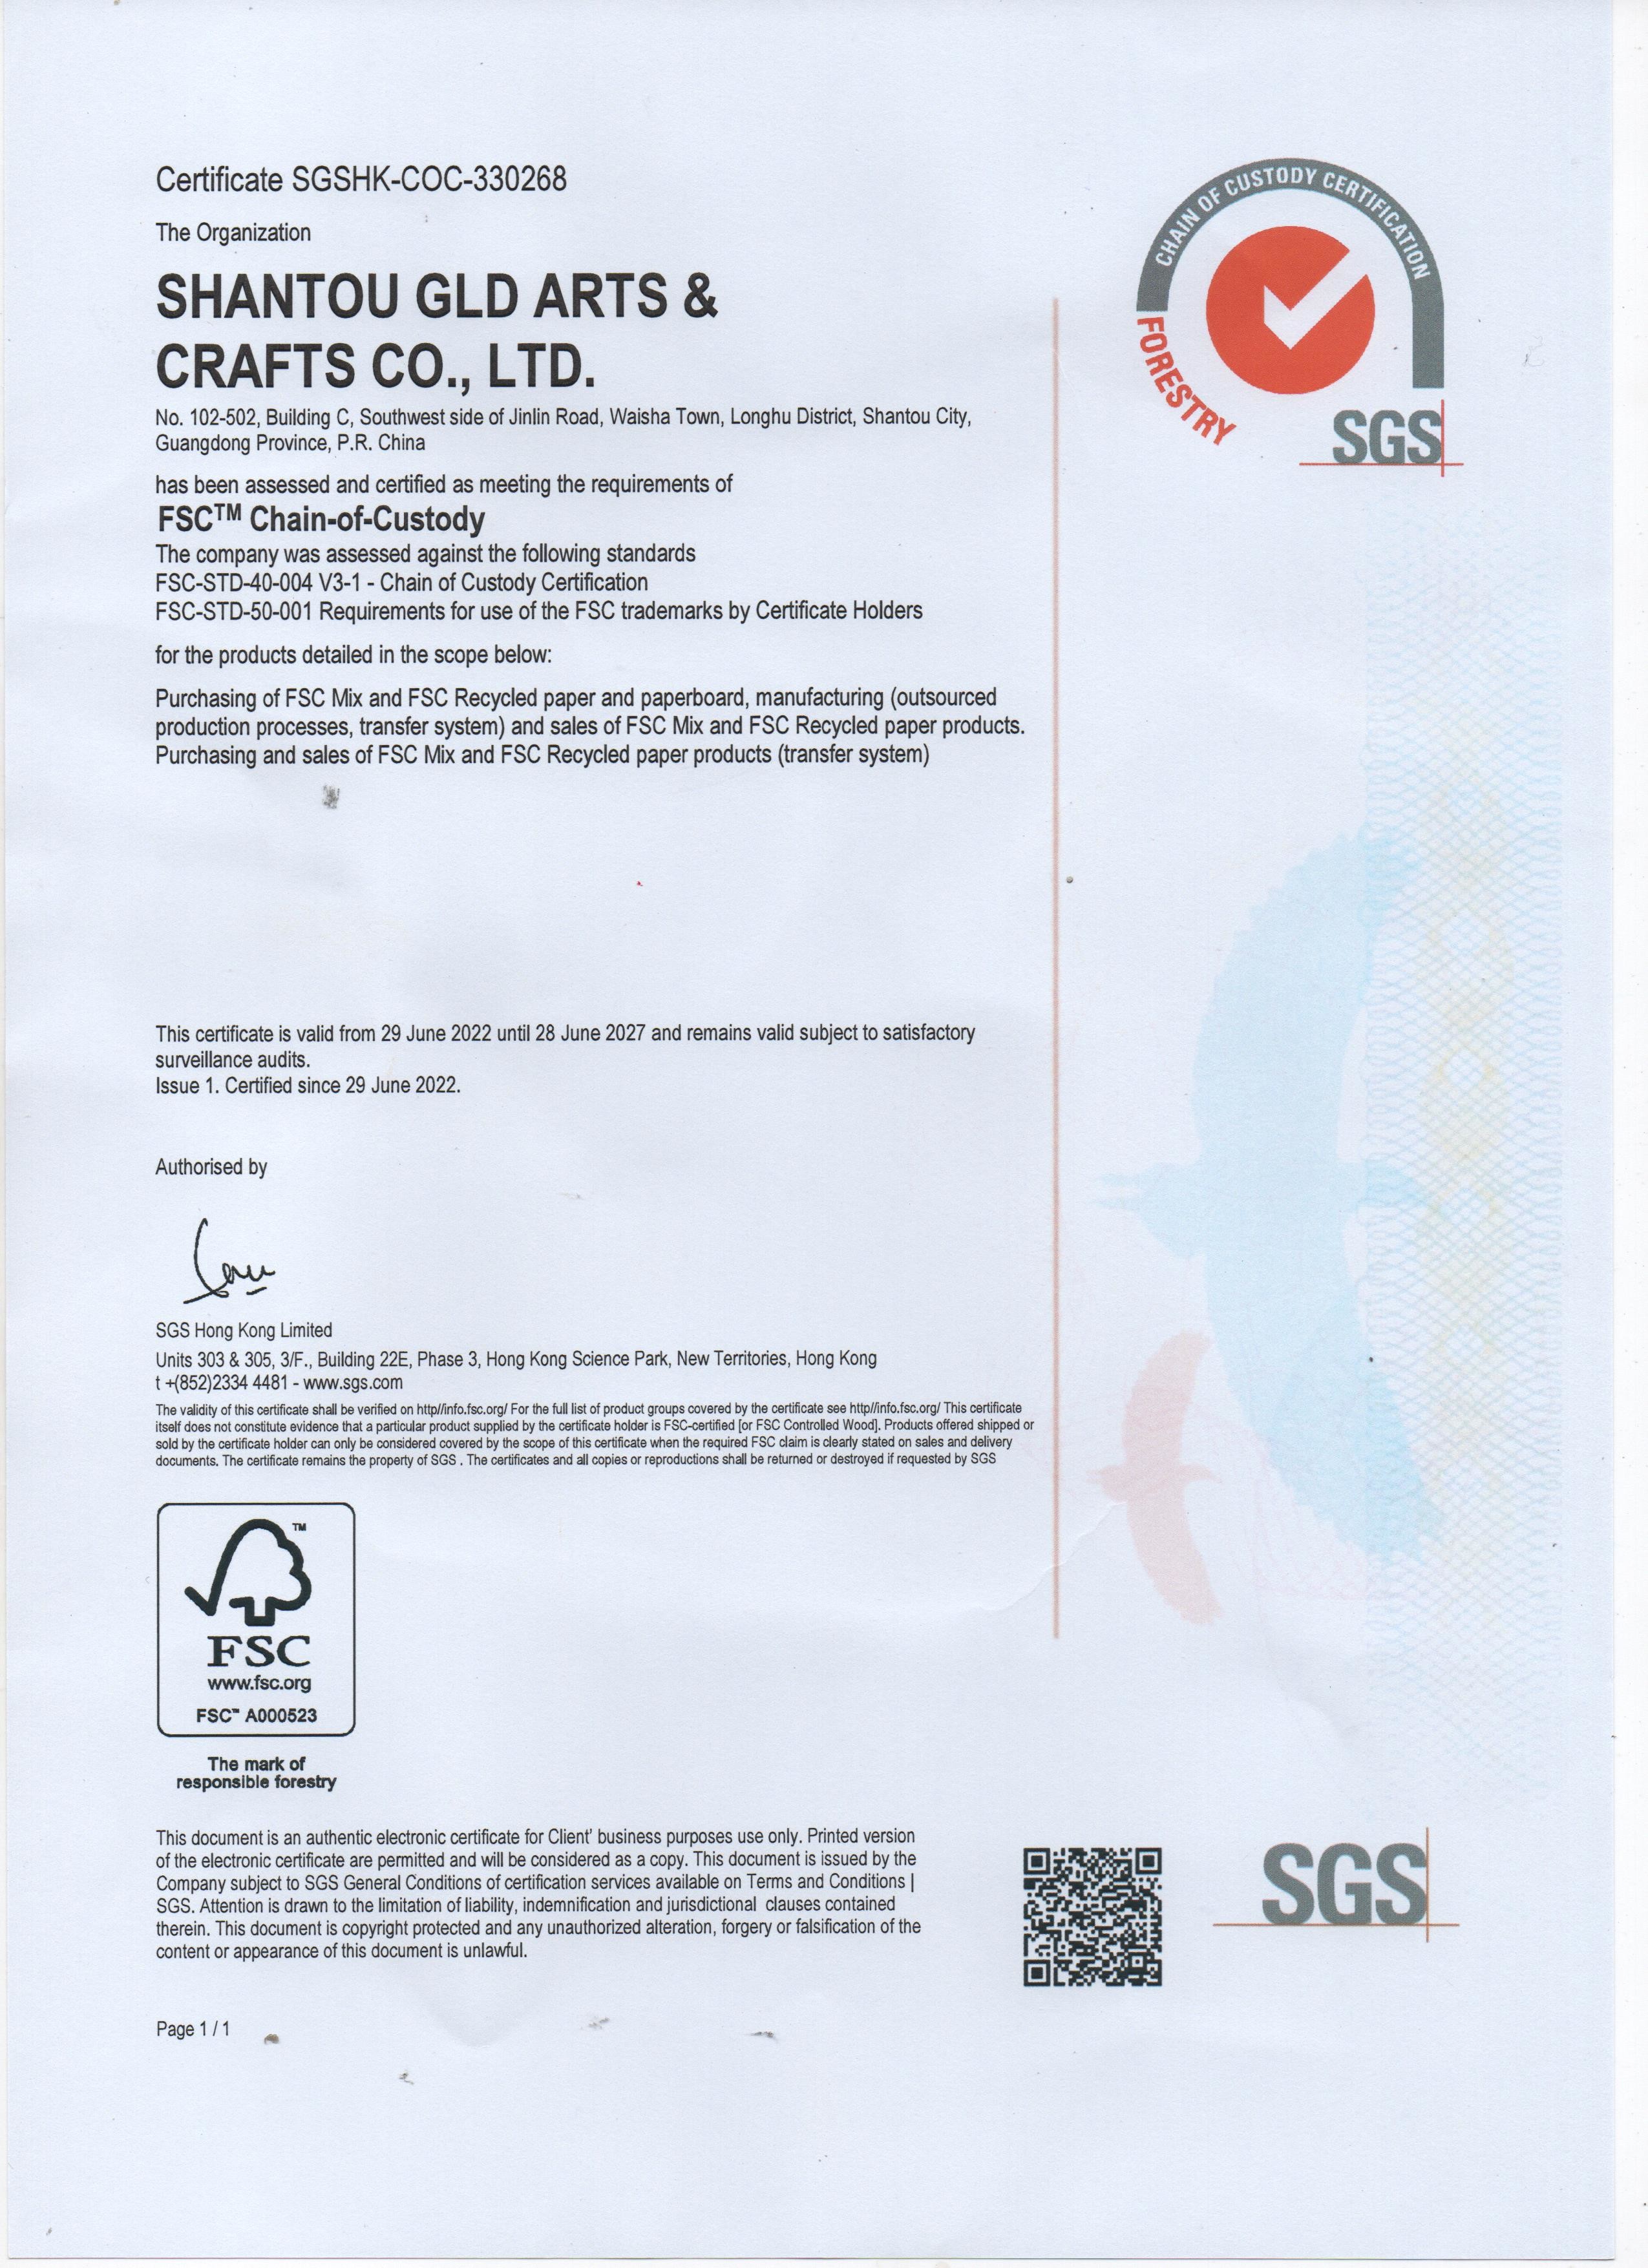 Shantou GLD Arts & Crafts Co., Ltd. Certifications